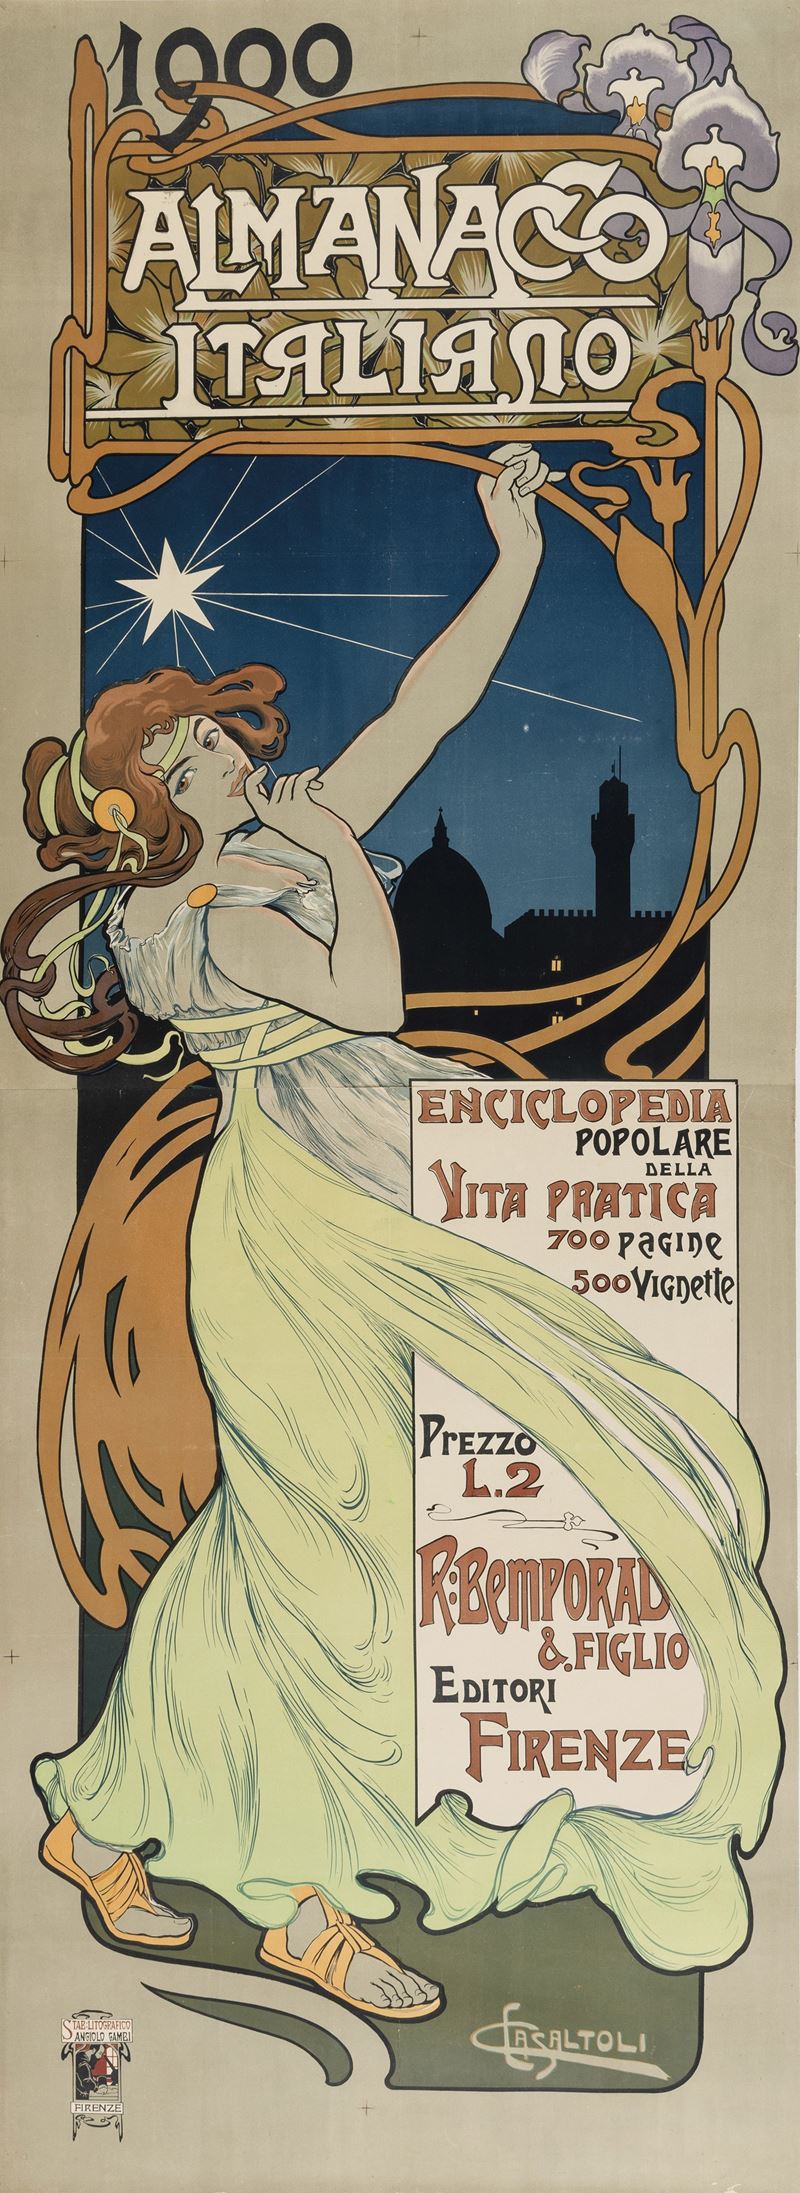 Carlo Casaltoli : 1900 Almanacco Italiano  - Auction Vintage Posters - Cambi Casa d'Aste